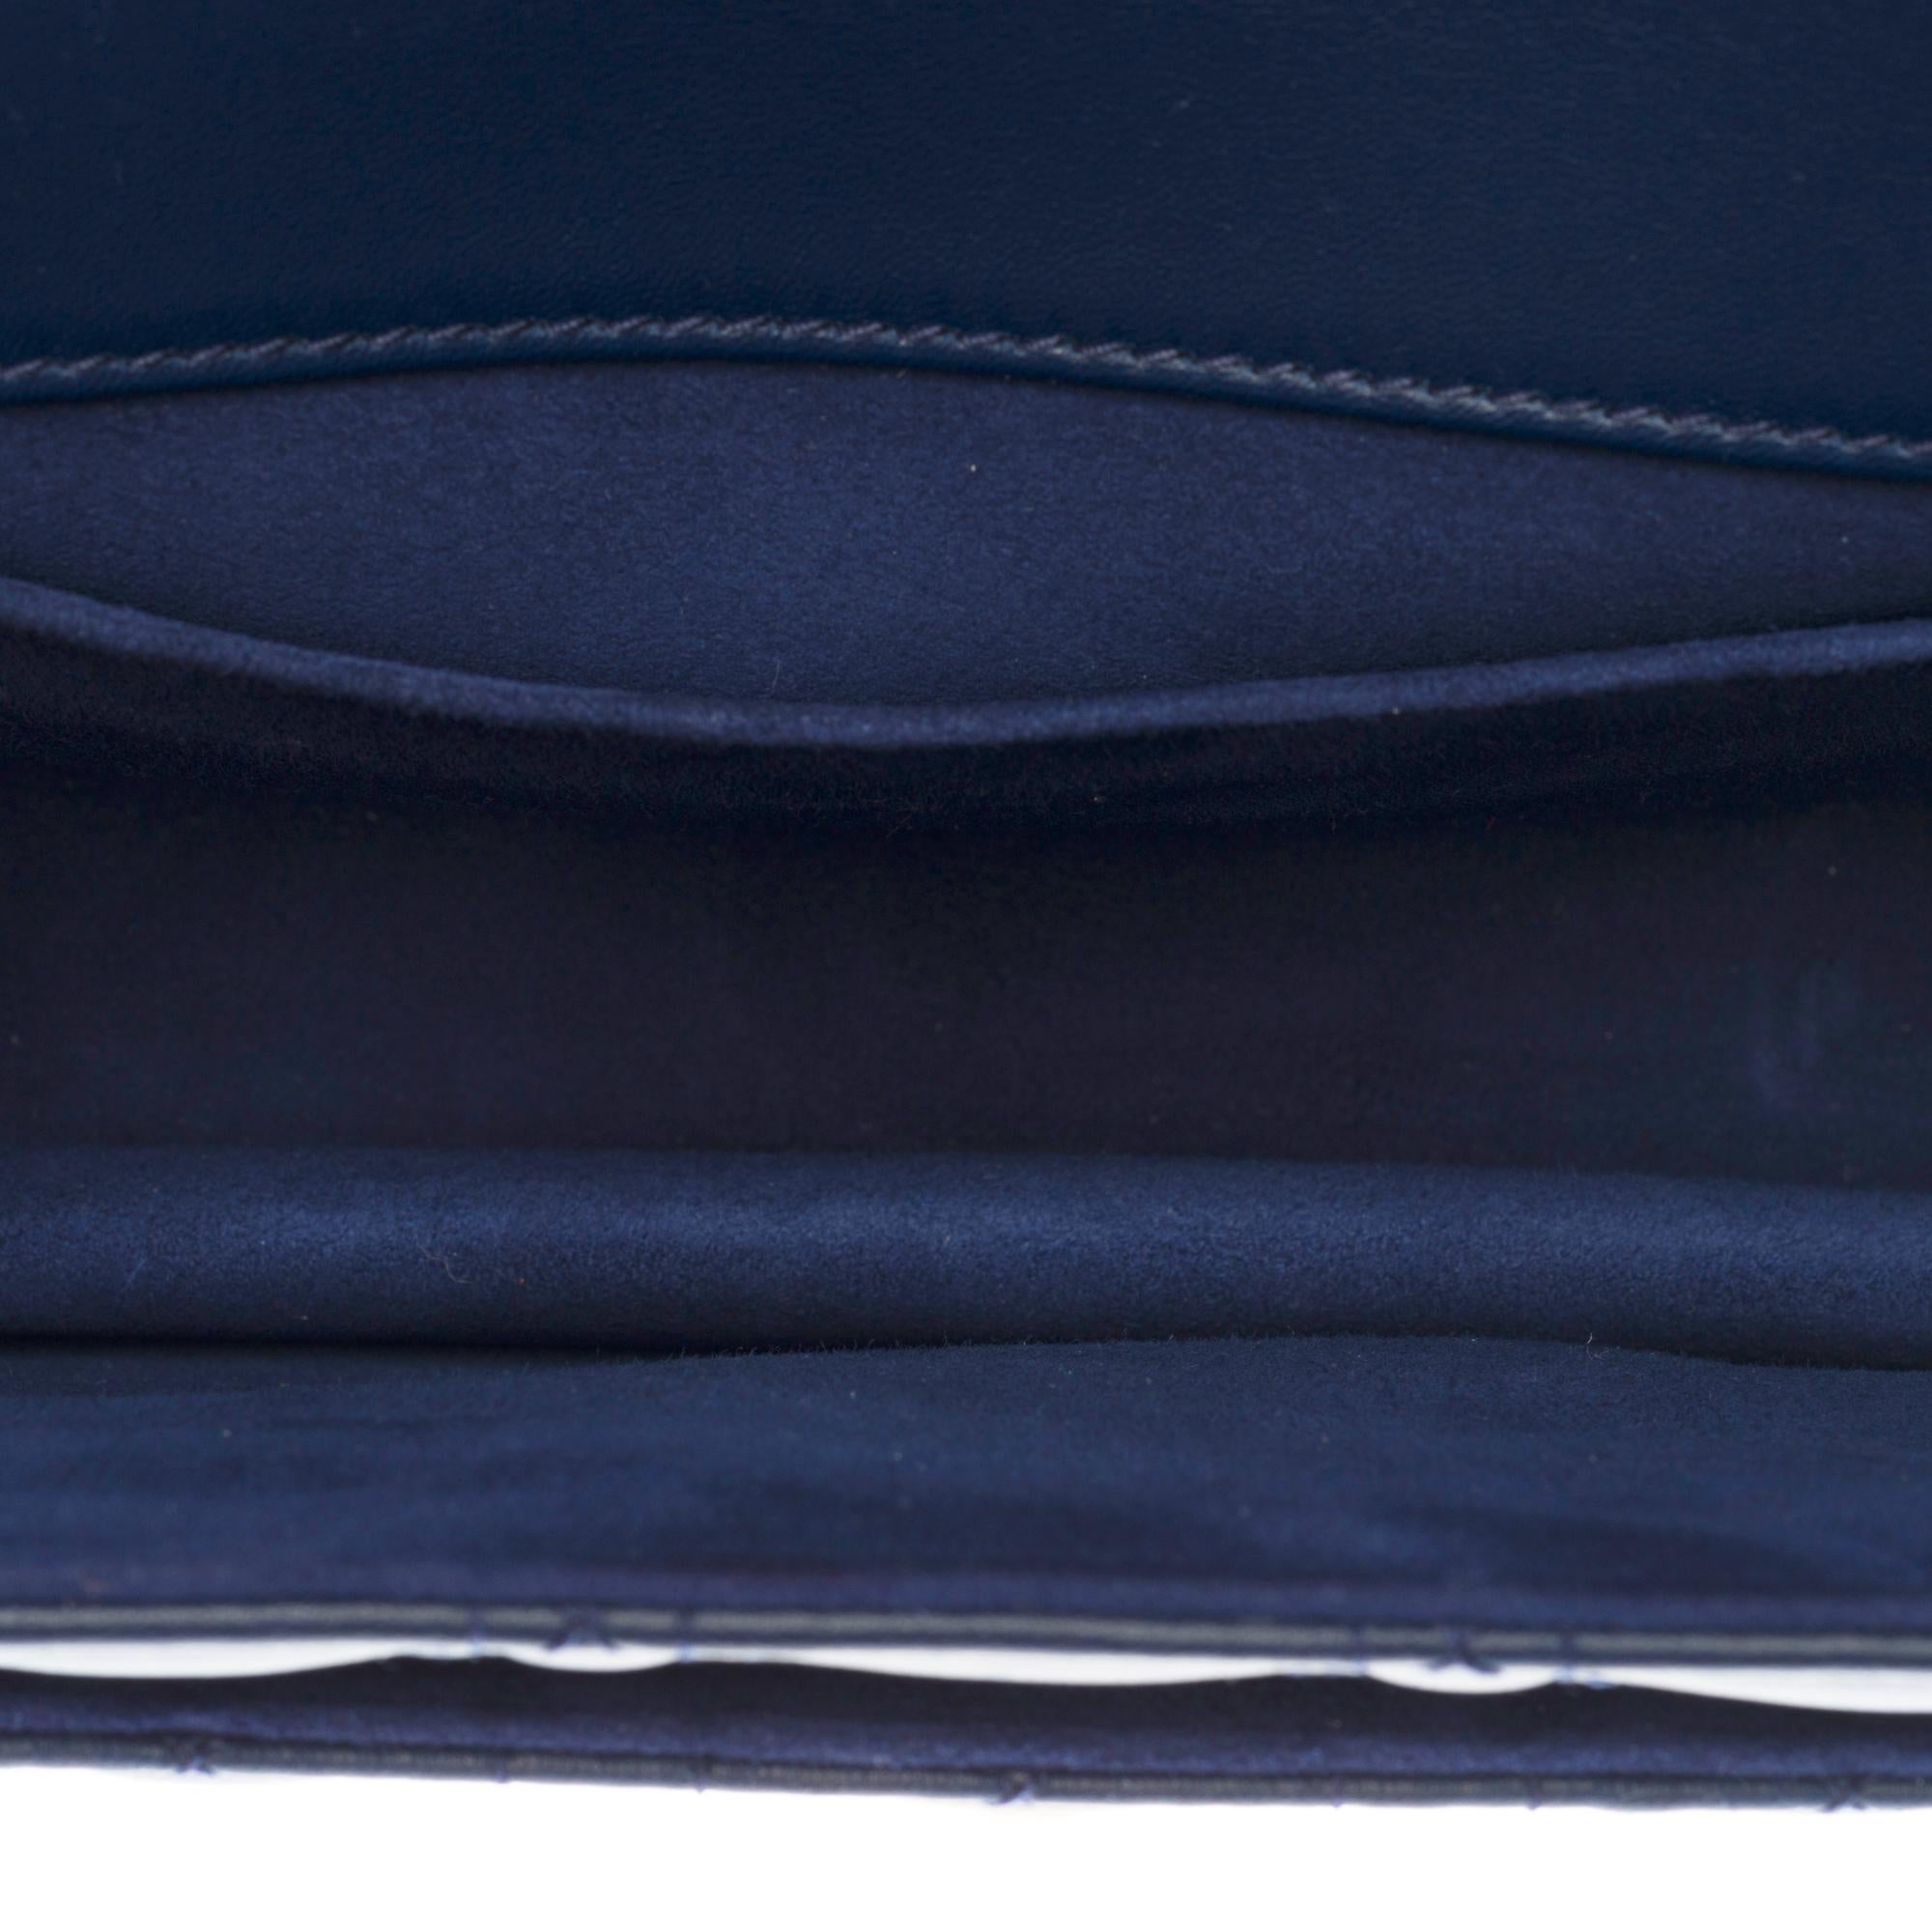 Black New /Christian Dior Miss Dior Shoulder bag in Navy Blue cannage leather, GHW